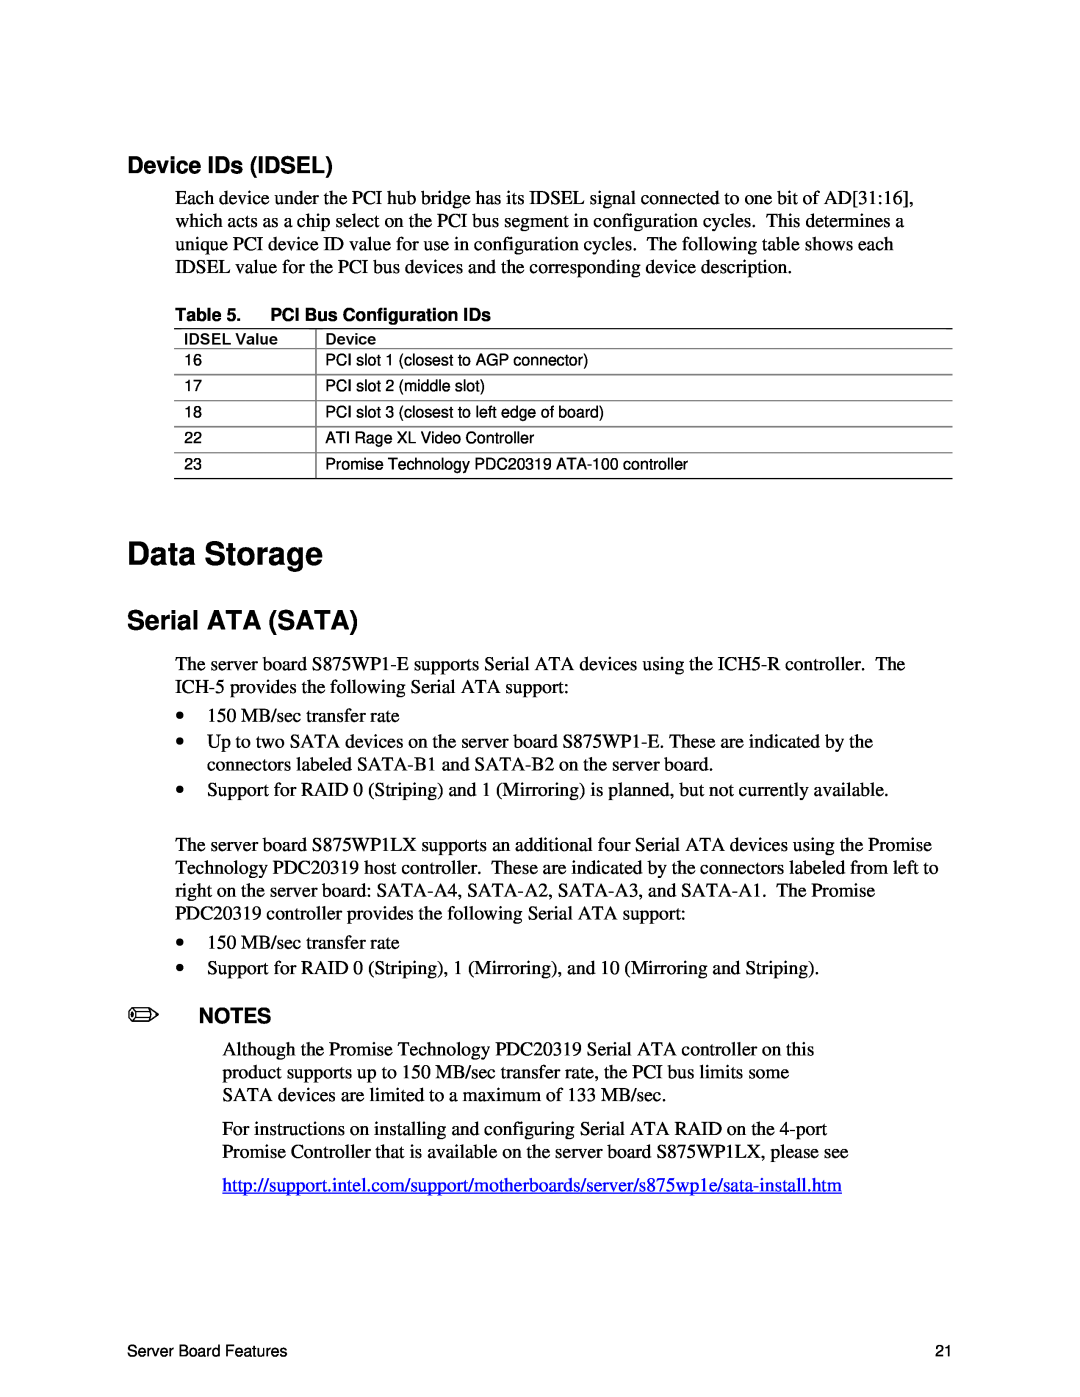 Intel S875WP1-E manual Data Storage, Serial ATA SATA, Device IDs IDSEL 